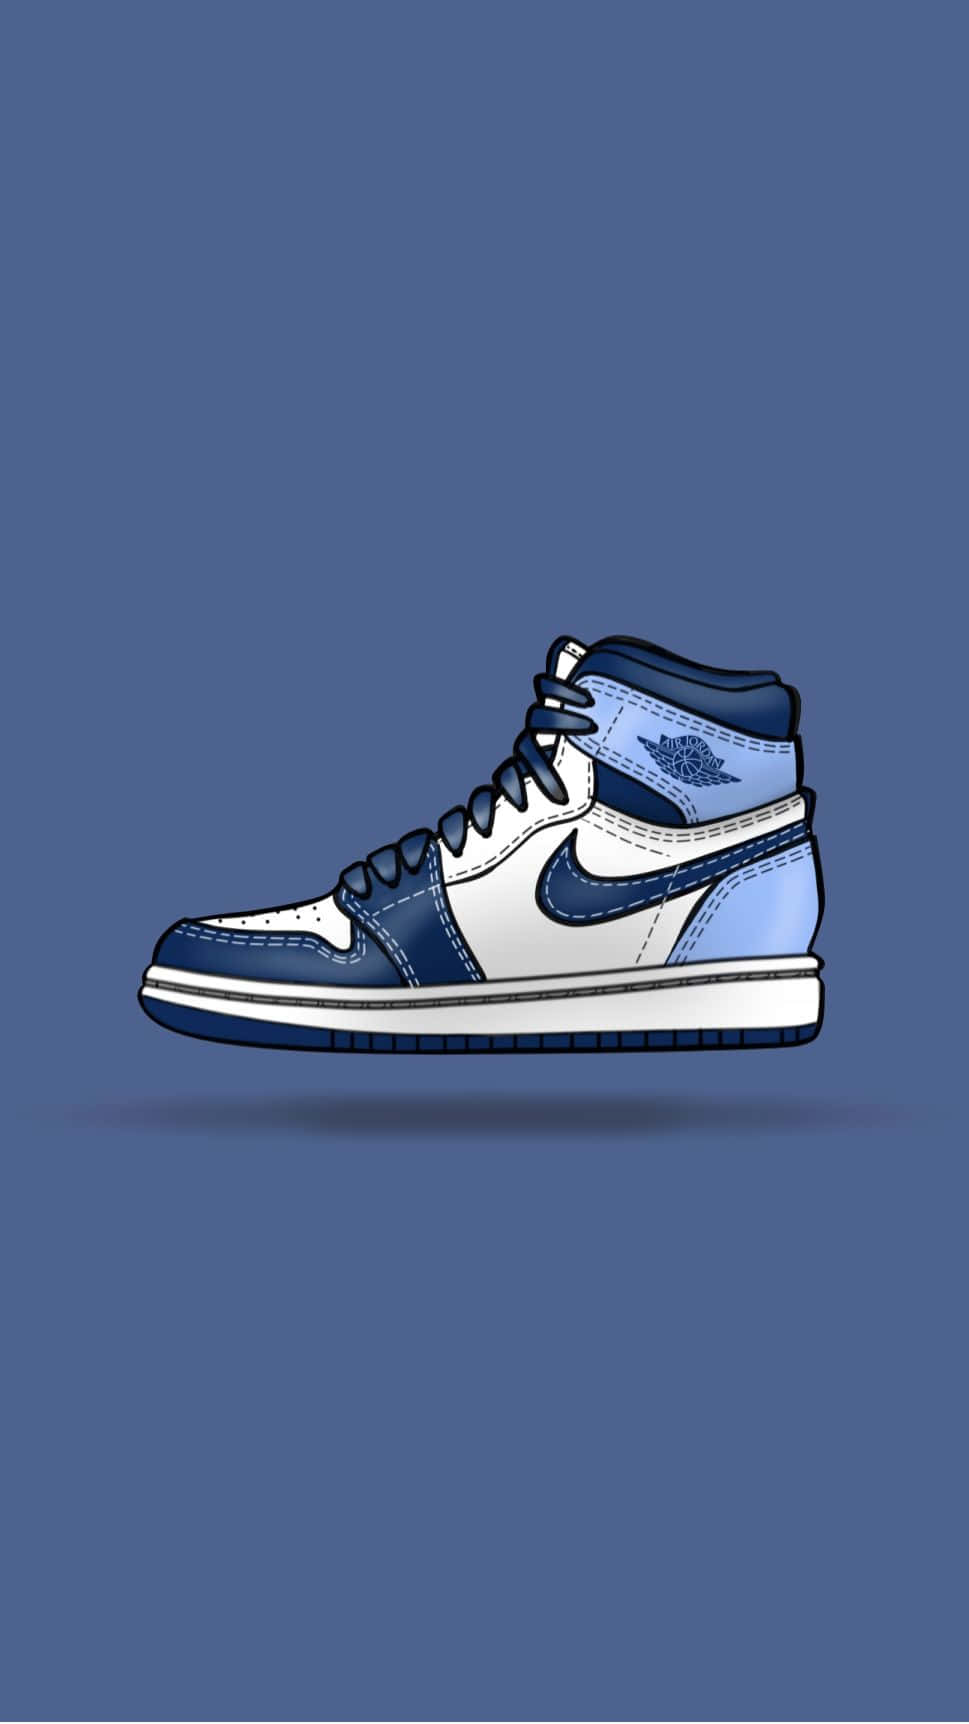 Schwebenderblauer Nike Jordan Air Schuh. Wallpaper